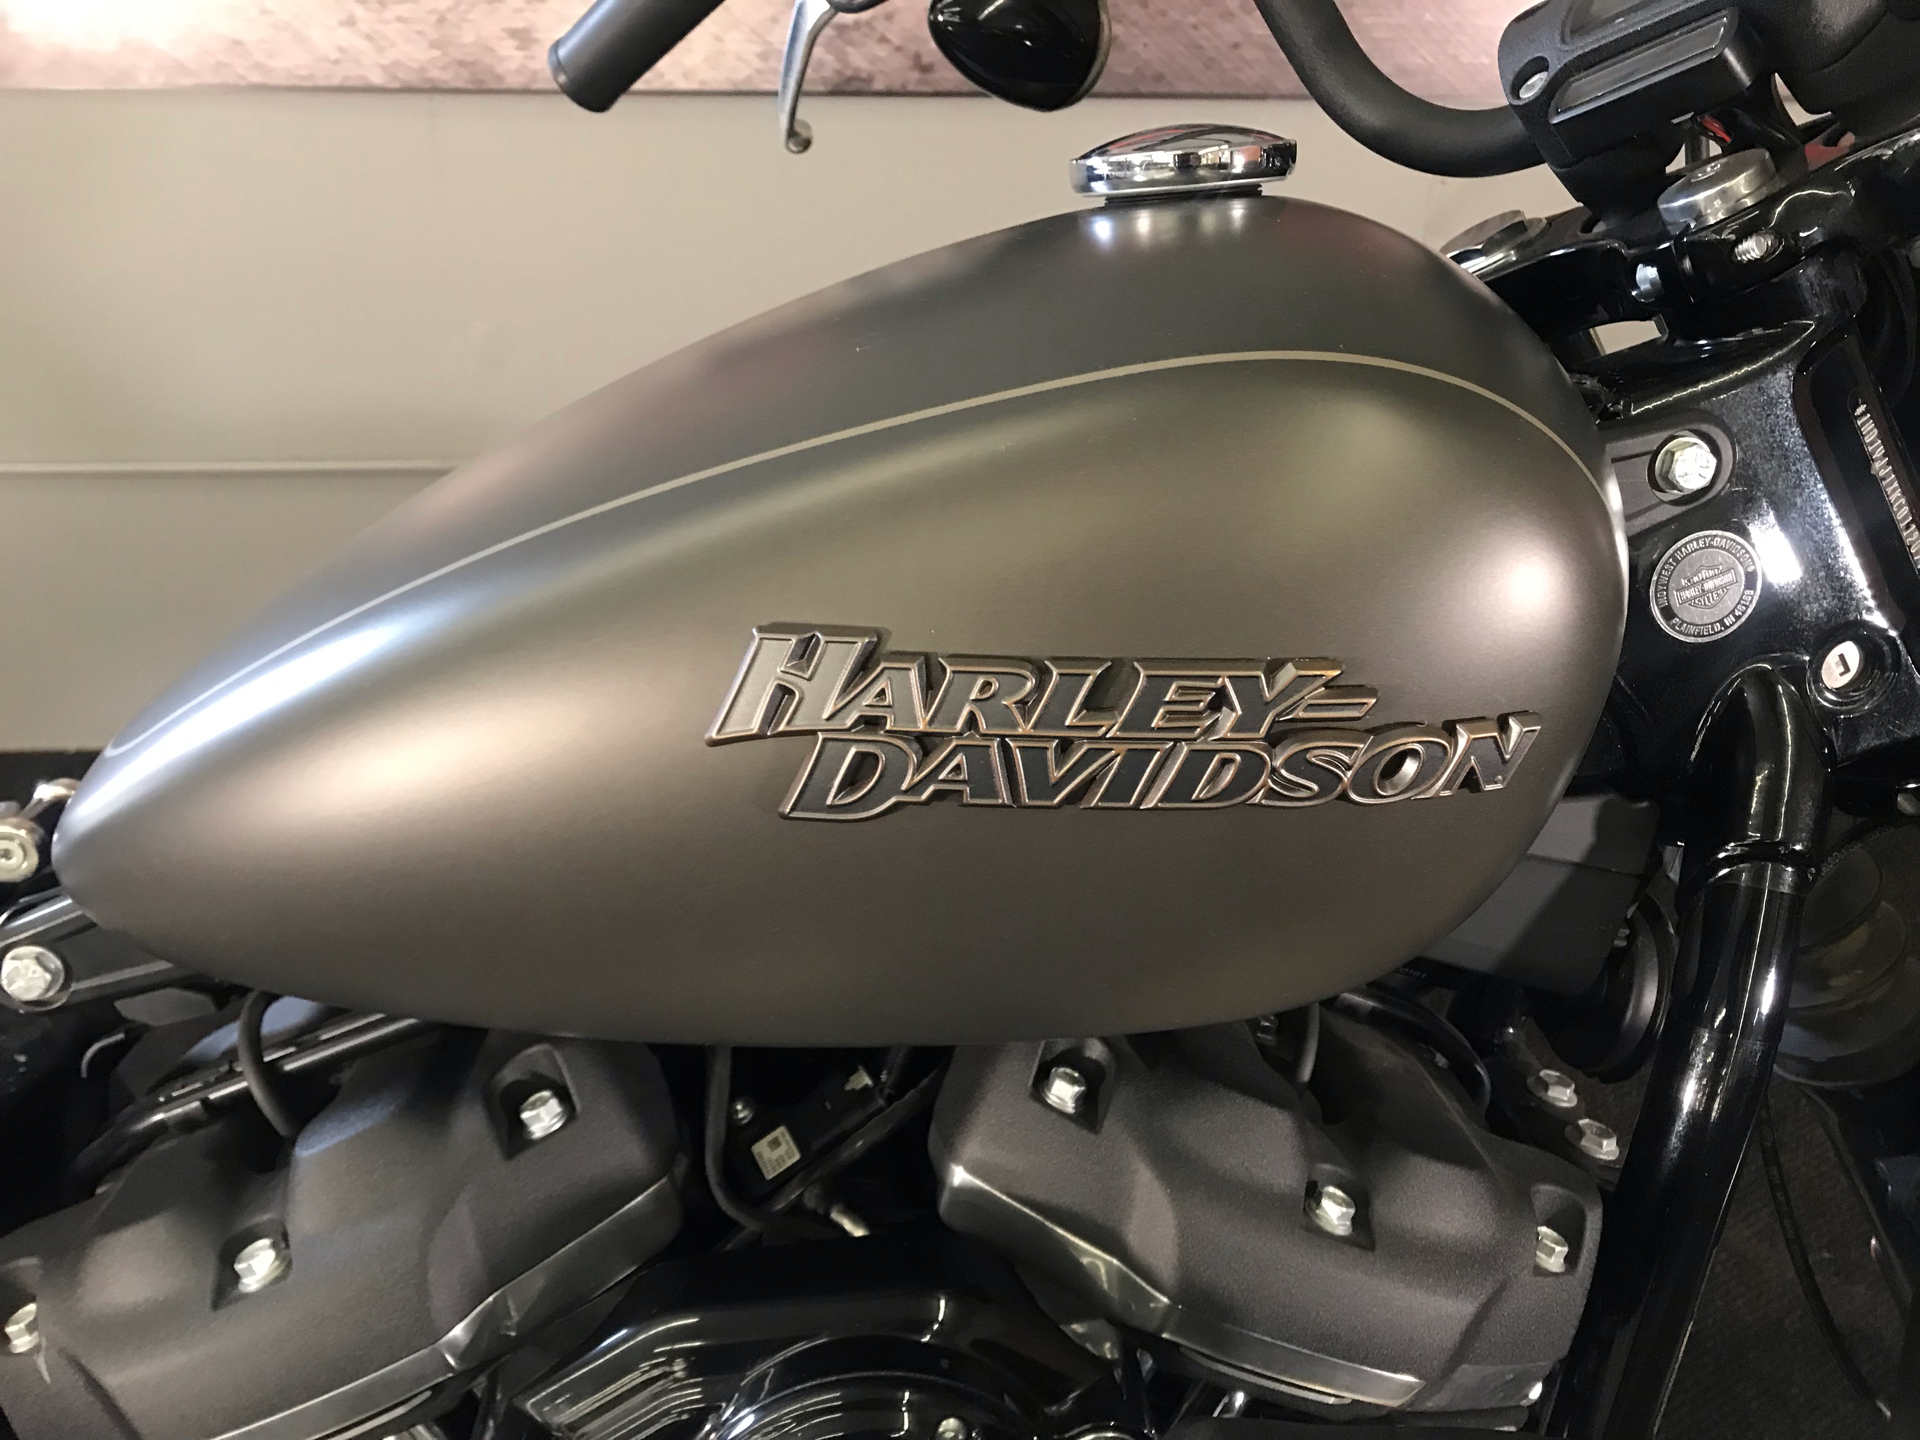 2019 Harley-Davidson Street Bob® in Tyrone, Pennsylvania - Photo 4